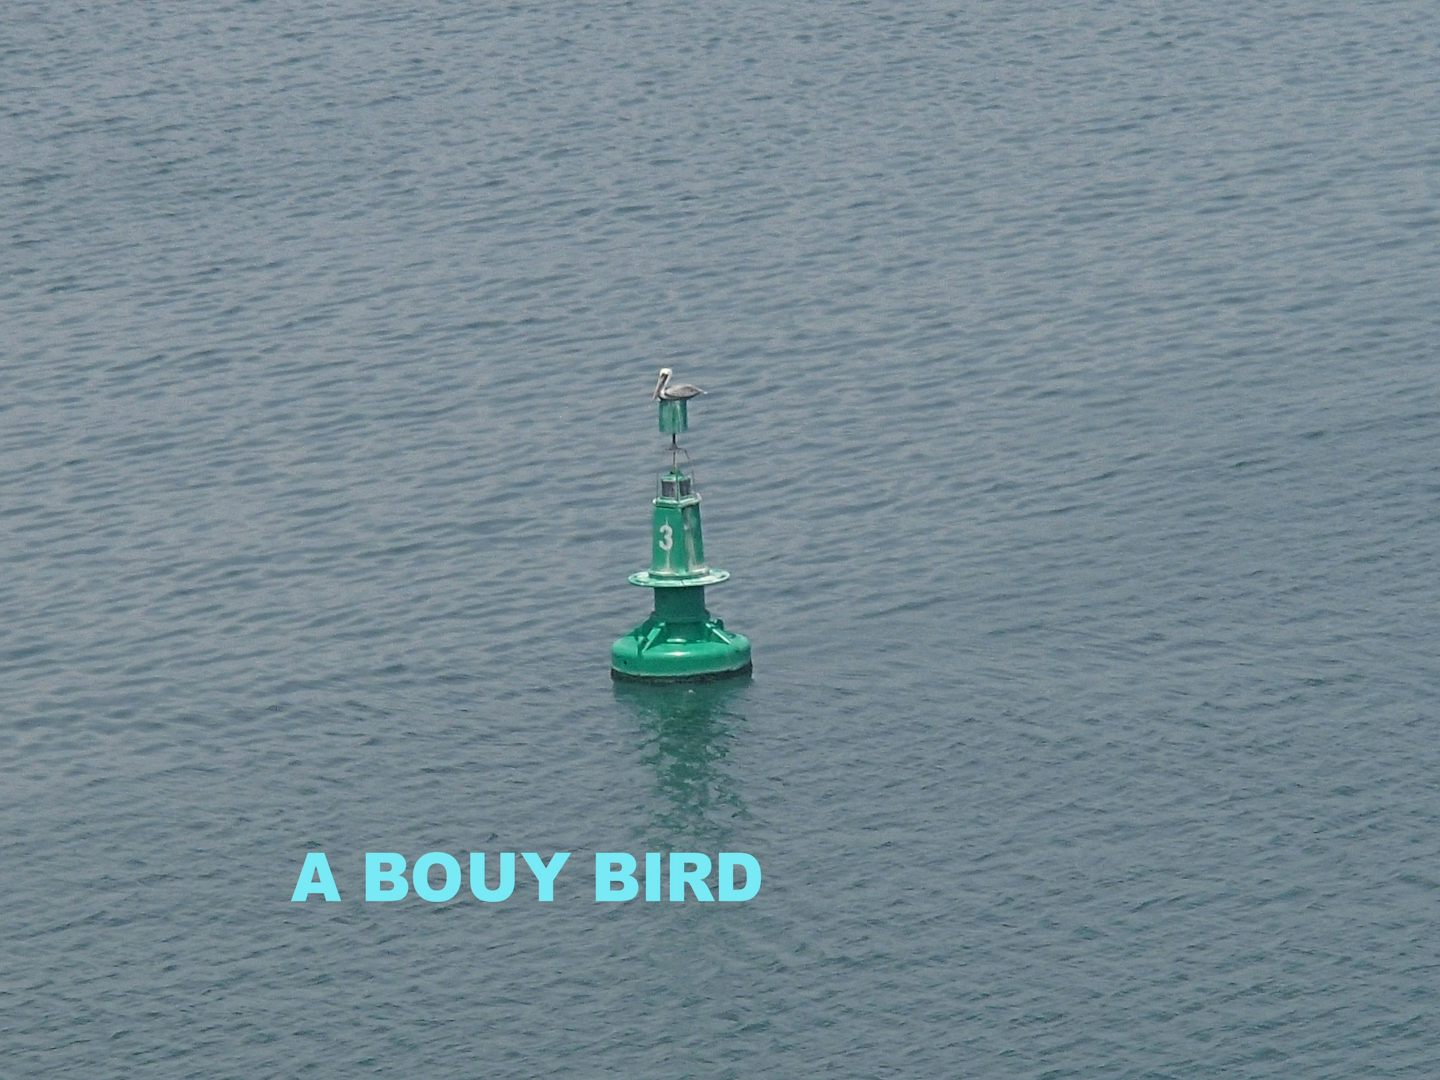 Again the imagination at work - A boy sea gull on a buoy.